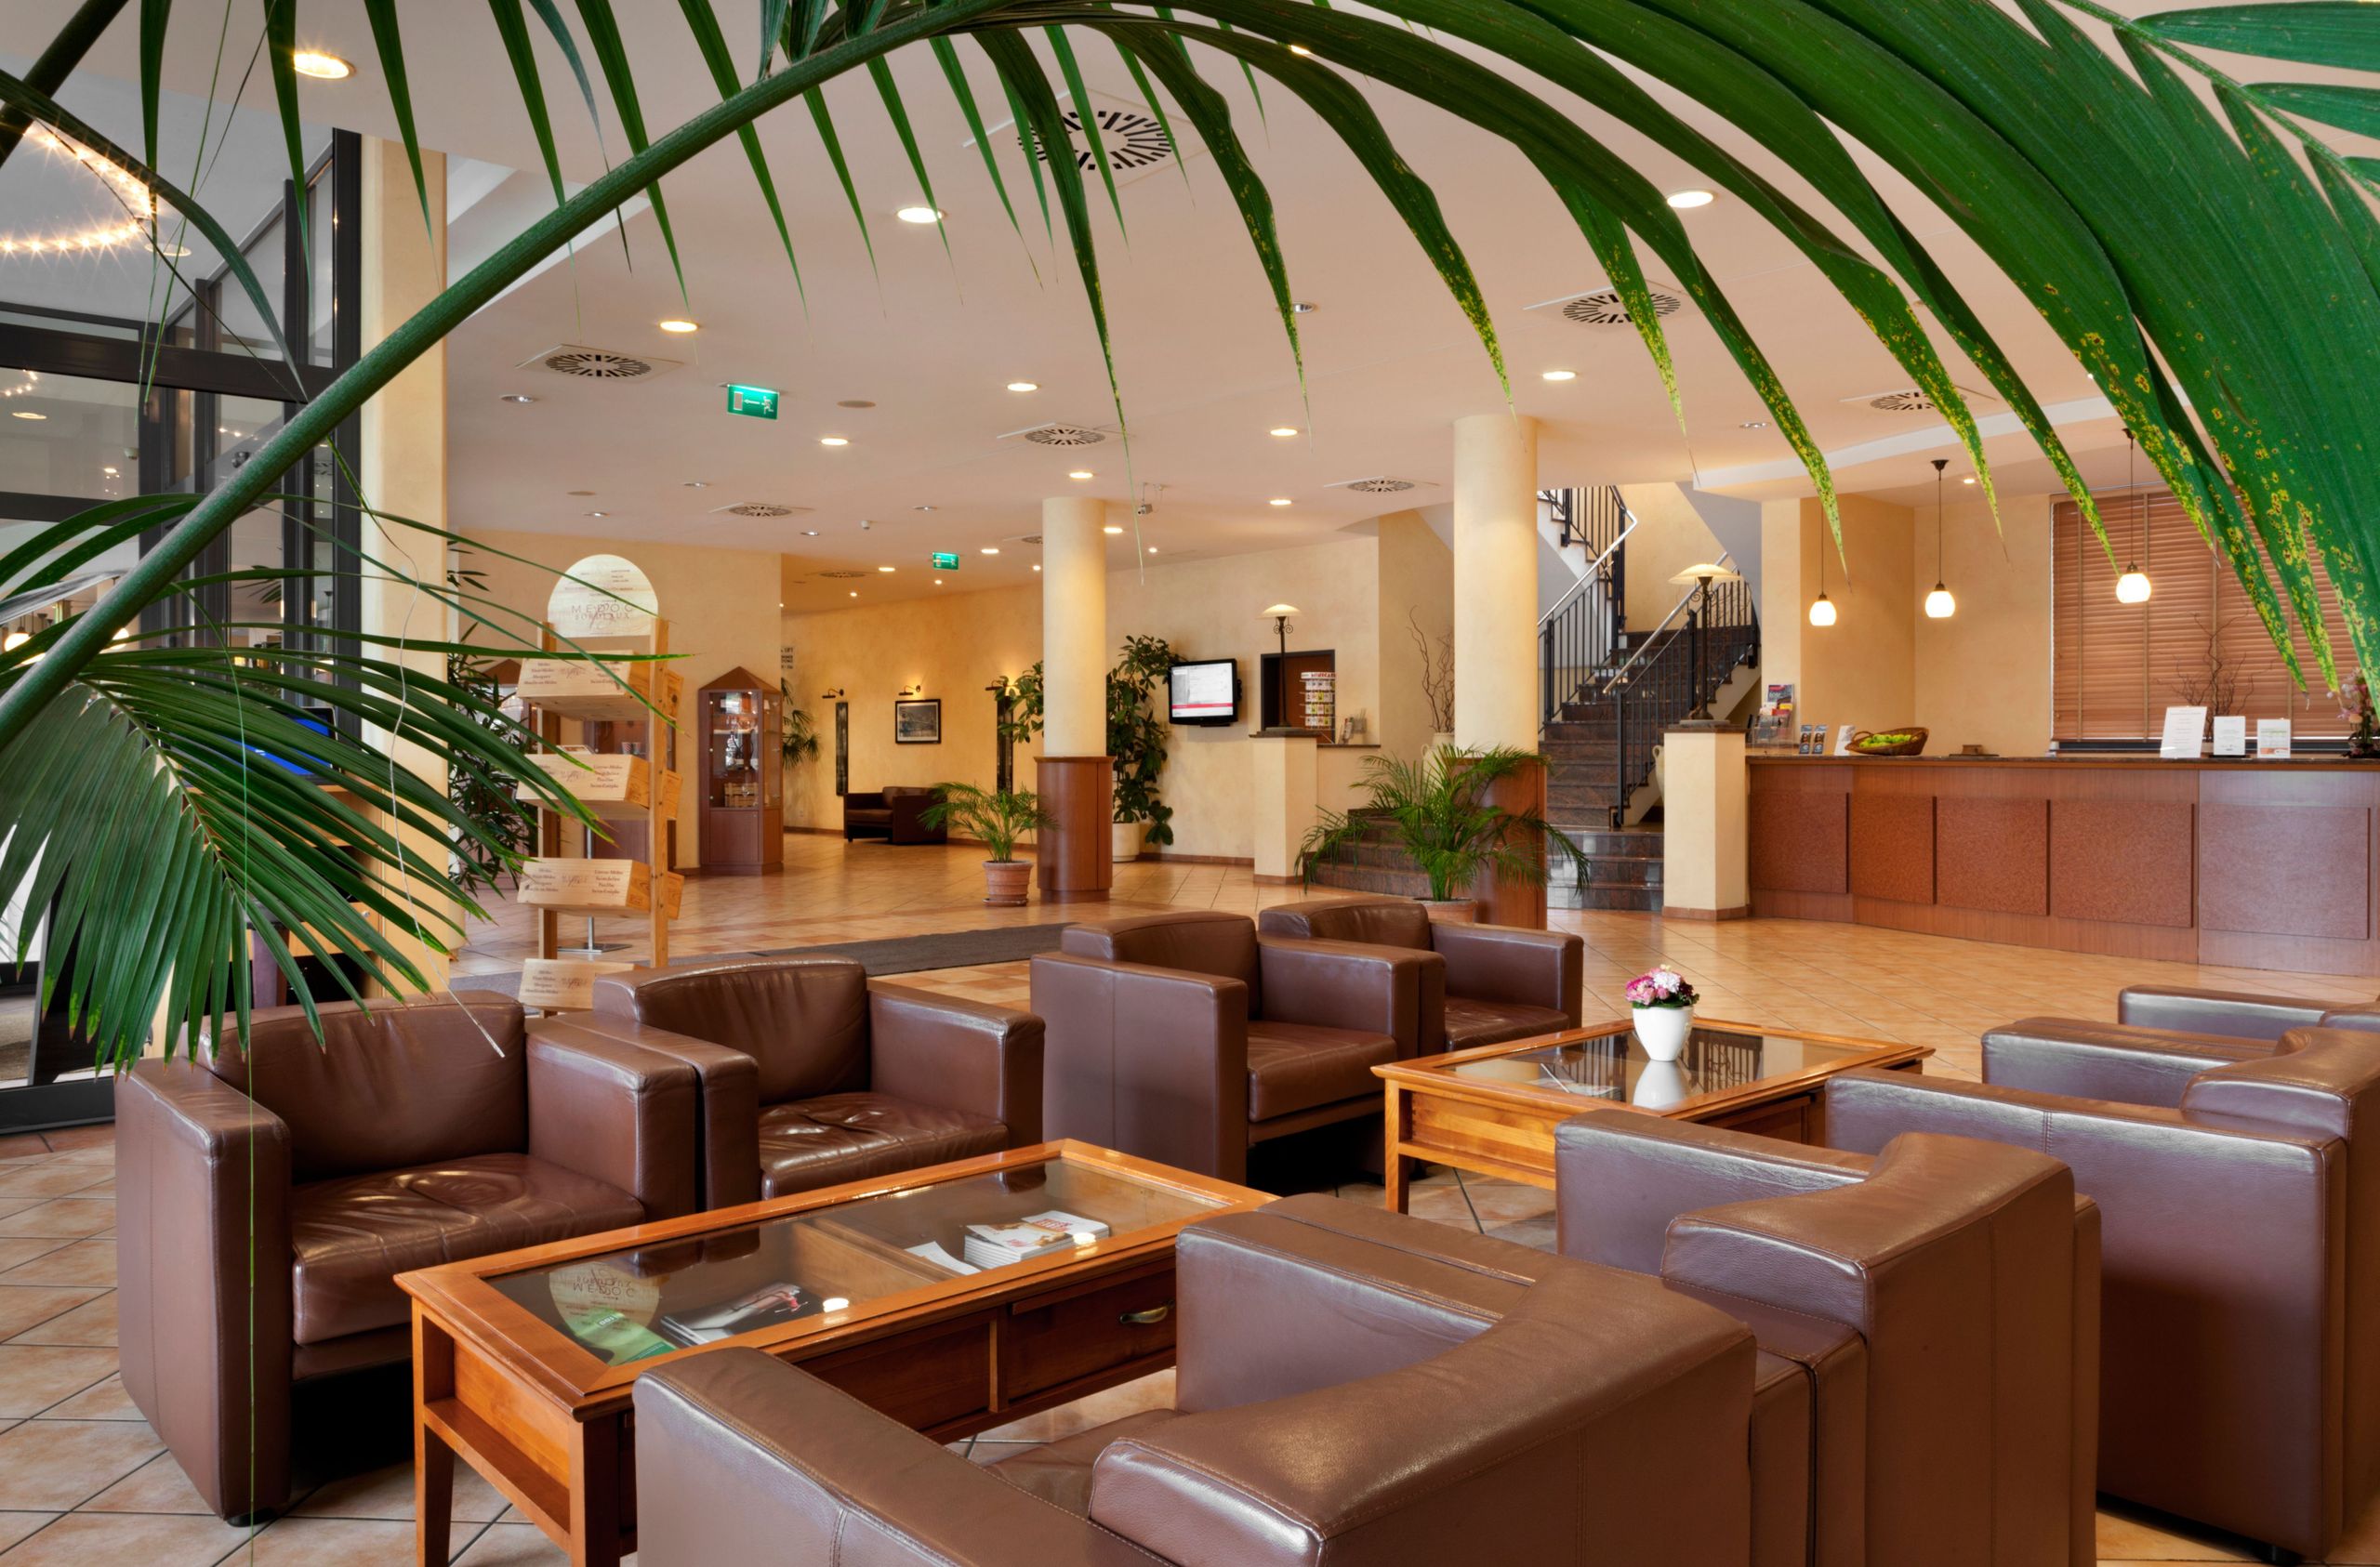 IntercityHotel Bremen - lobby - reception - lounge